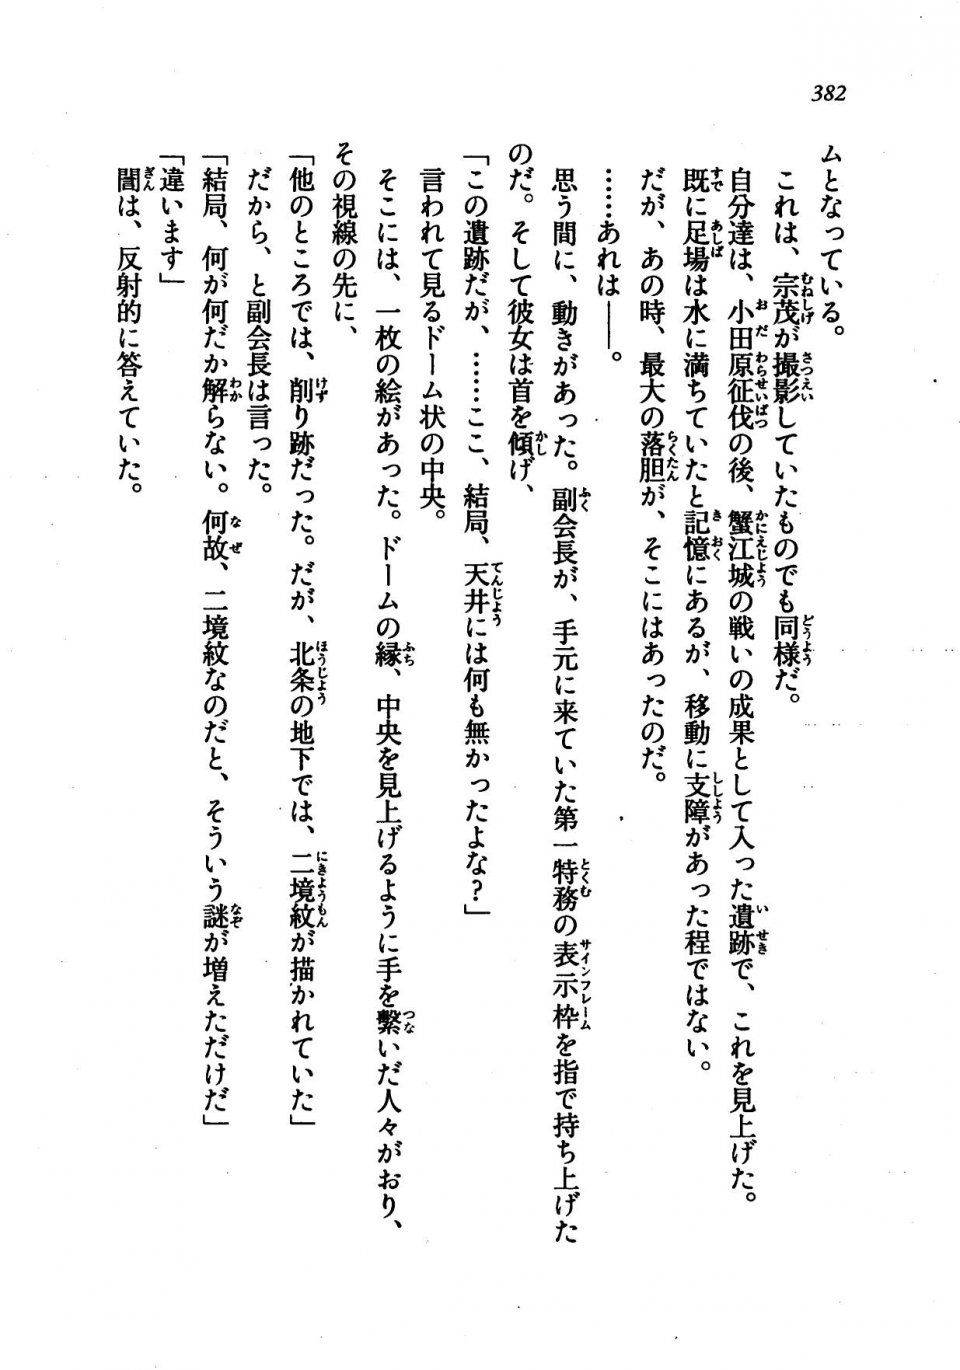 Kyoukai Senjou no Horizon LN Vol 21(8C) Part 1 - Photo #381